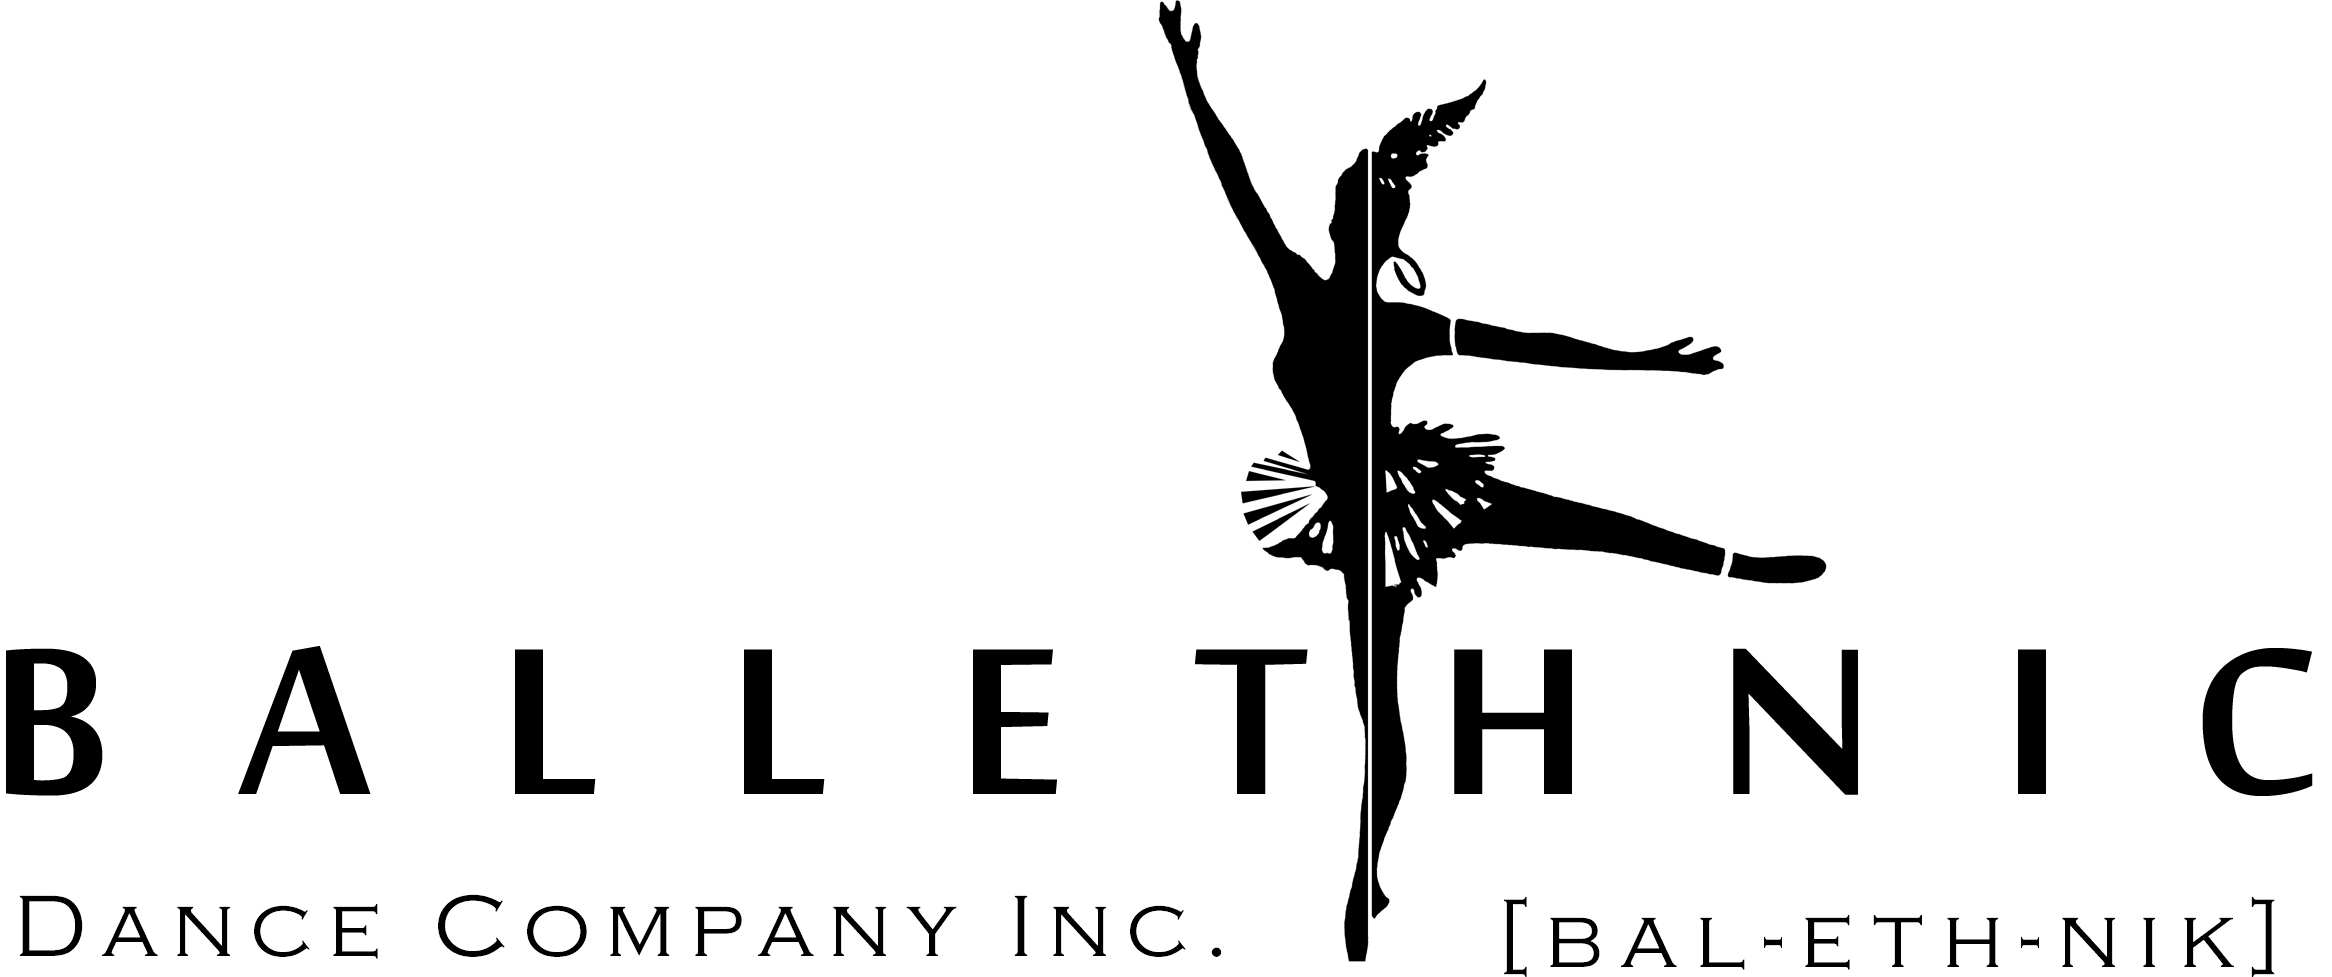 Ballethnic Logo 2332 x 977.jpg